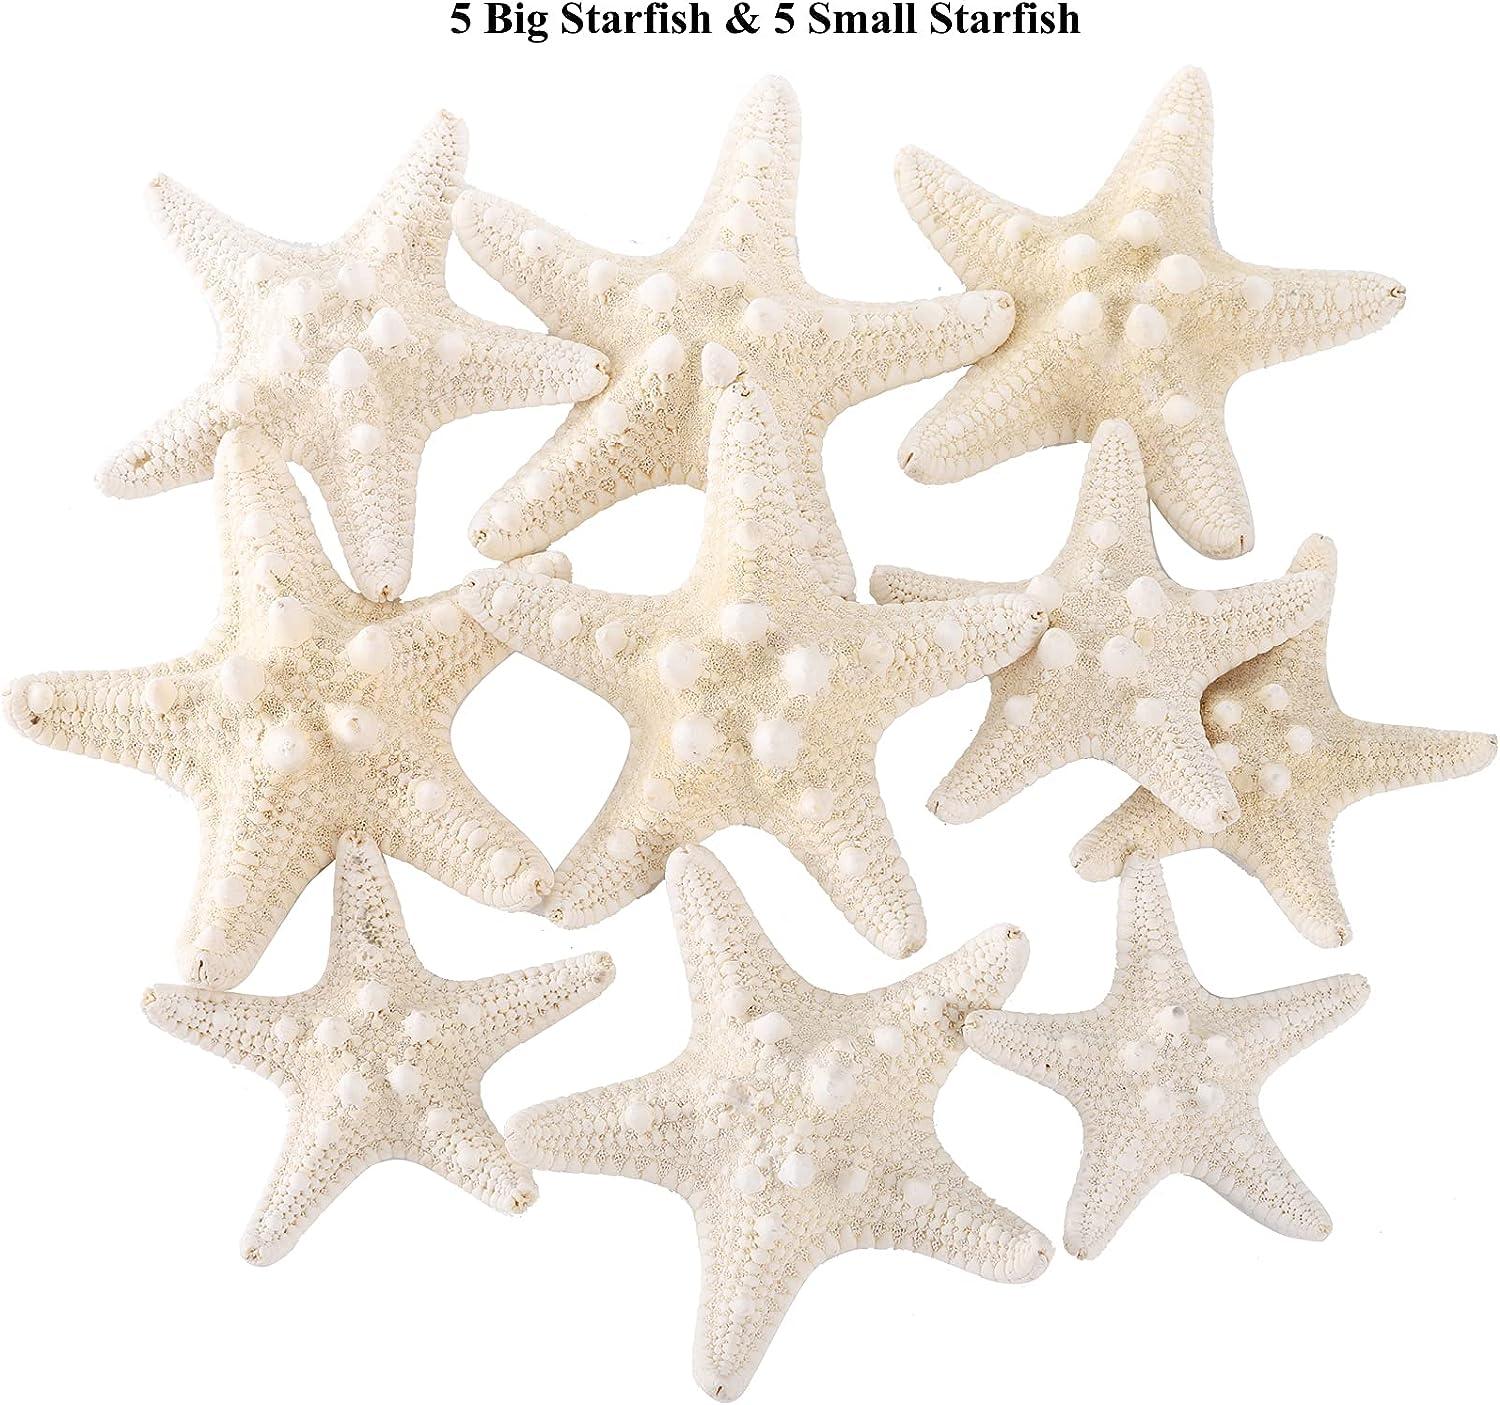  Jangostor 24 PCS Starfish, Mixed Starfish 1 to 2 and 2 to 3  Knobby Starfish Natural Seashells Starfish Perfect for Wedding Decor Beach  Theme Party, Home Decorations, DIY Crafts, Fish Tank 